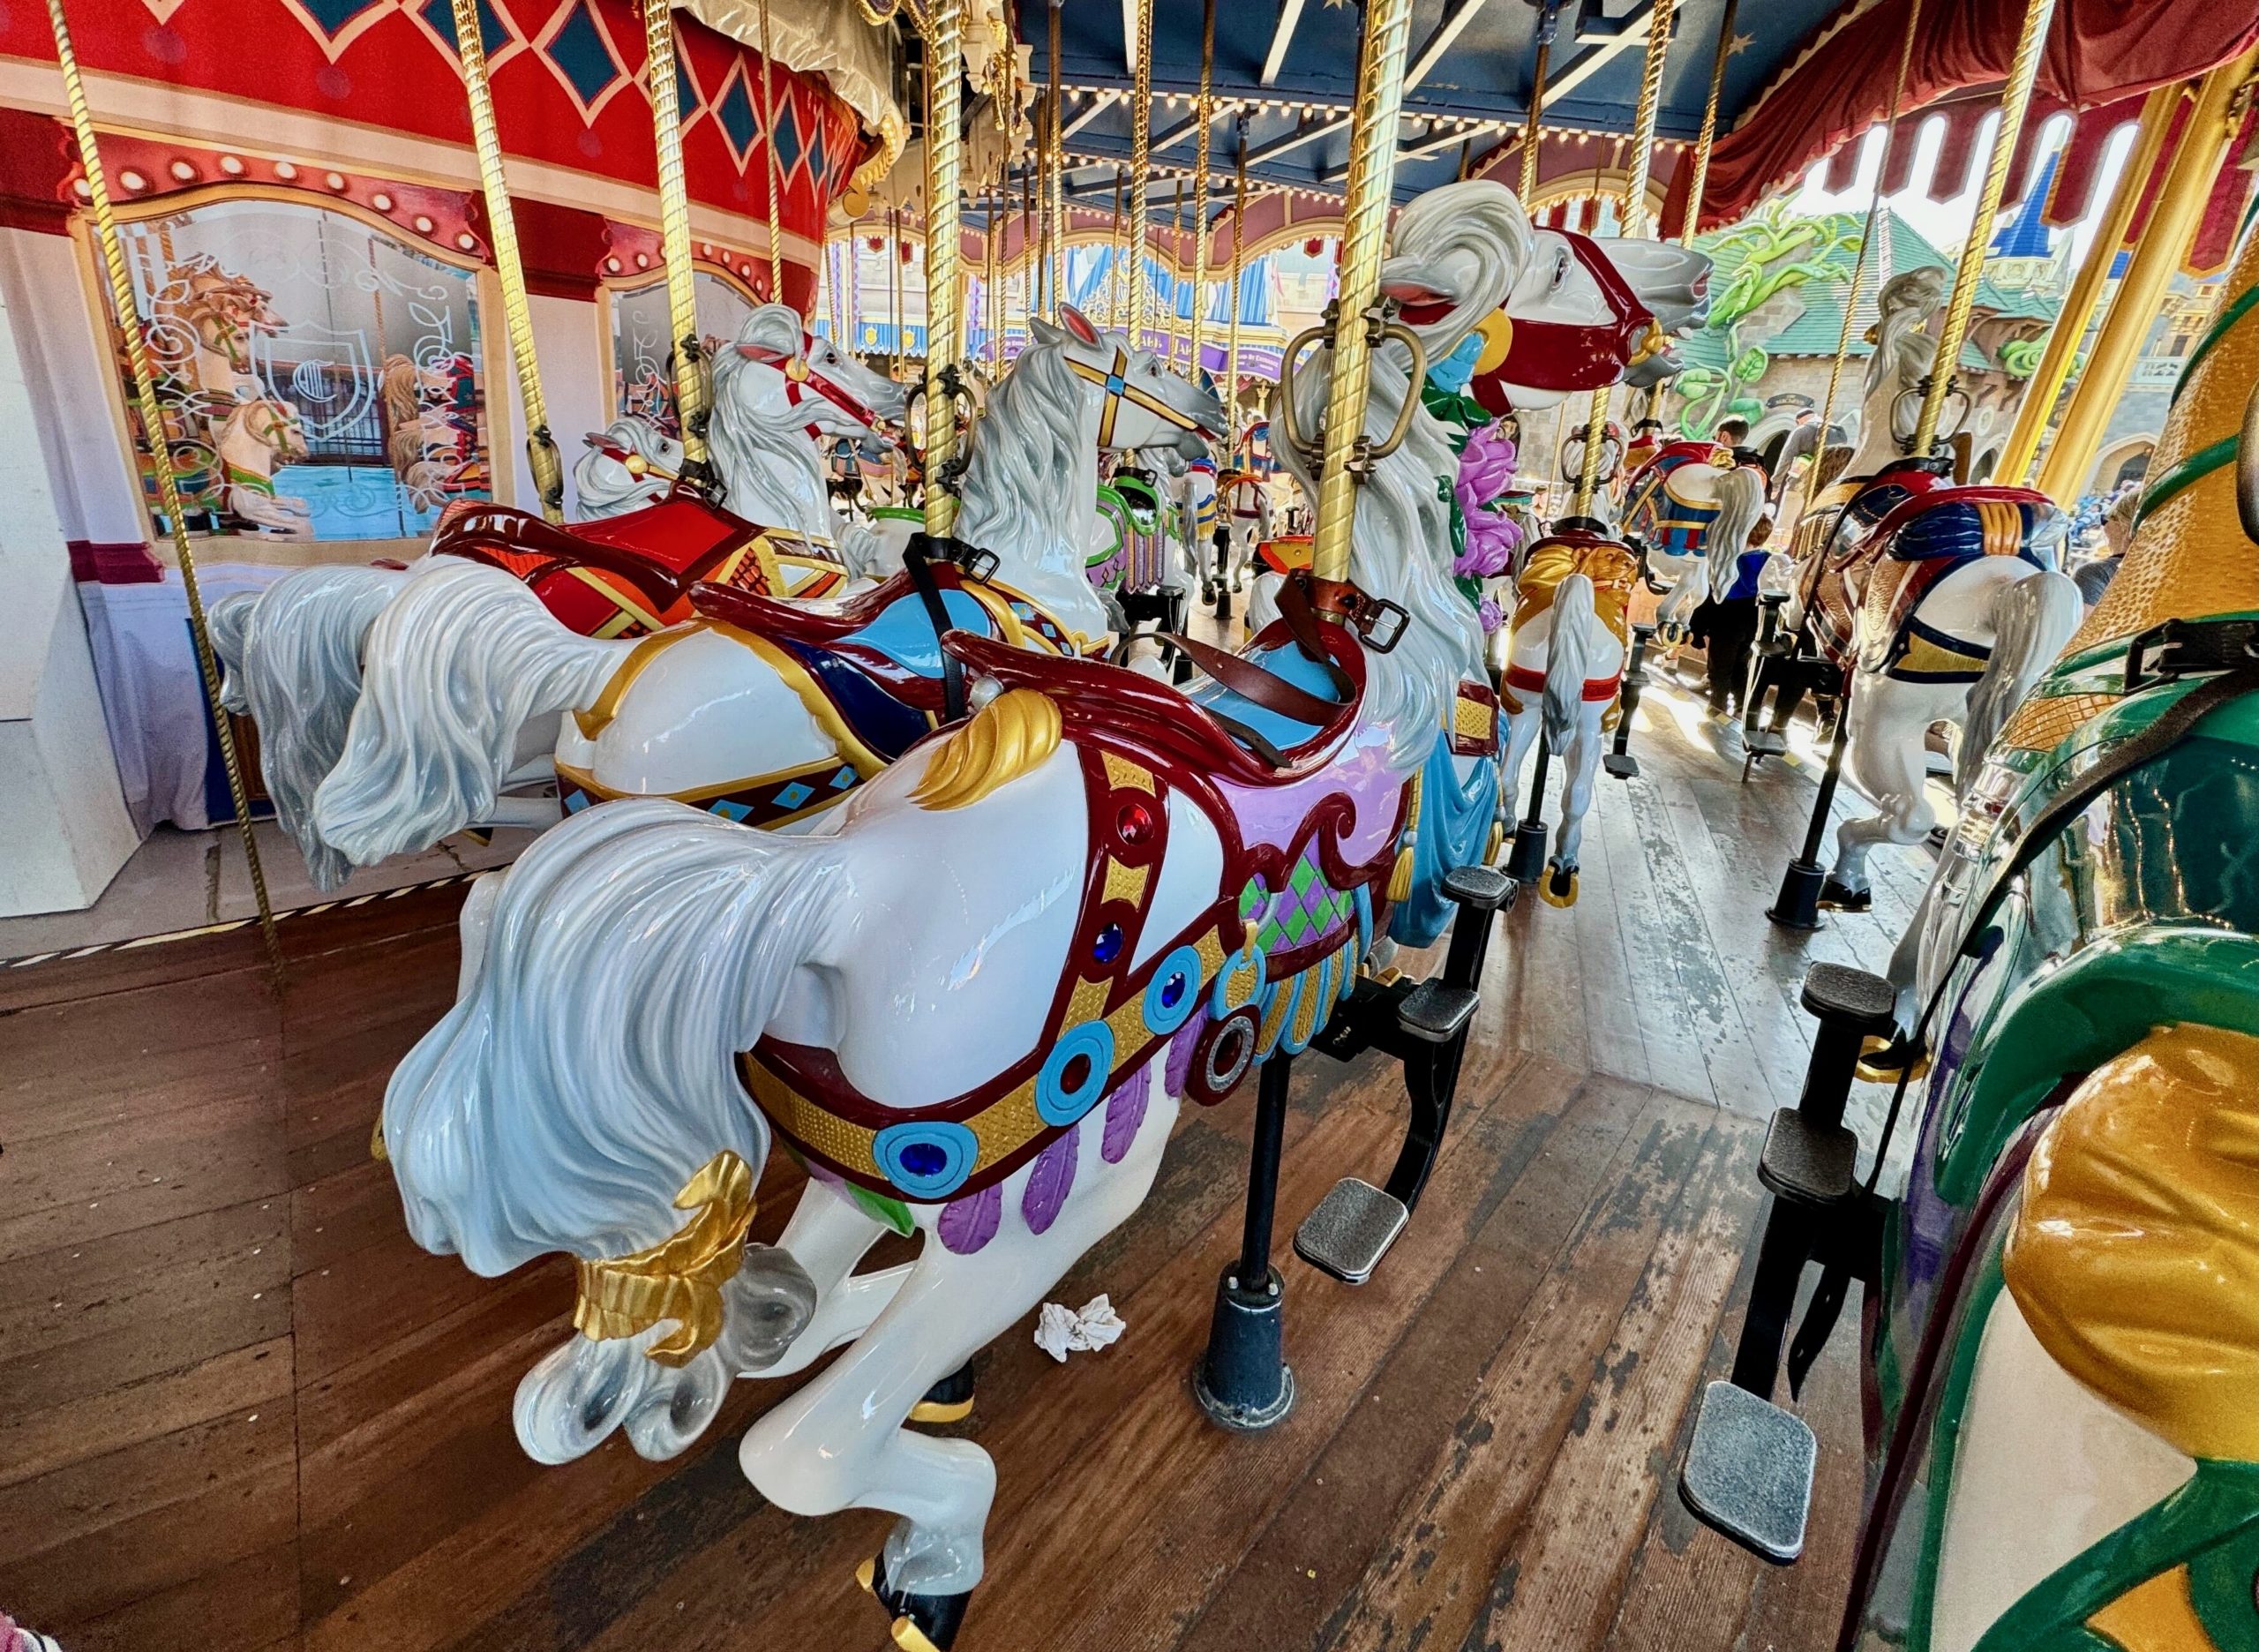 Cinderella's Horse Prince Charming's Regal Carousel